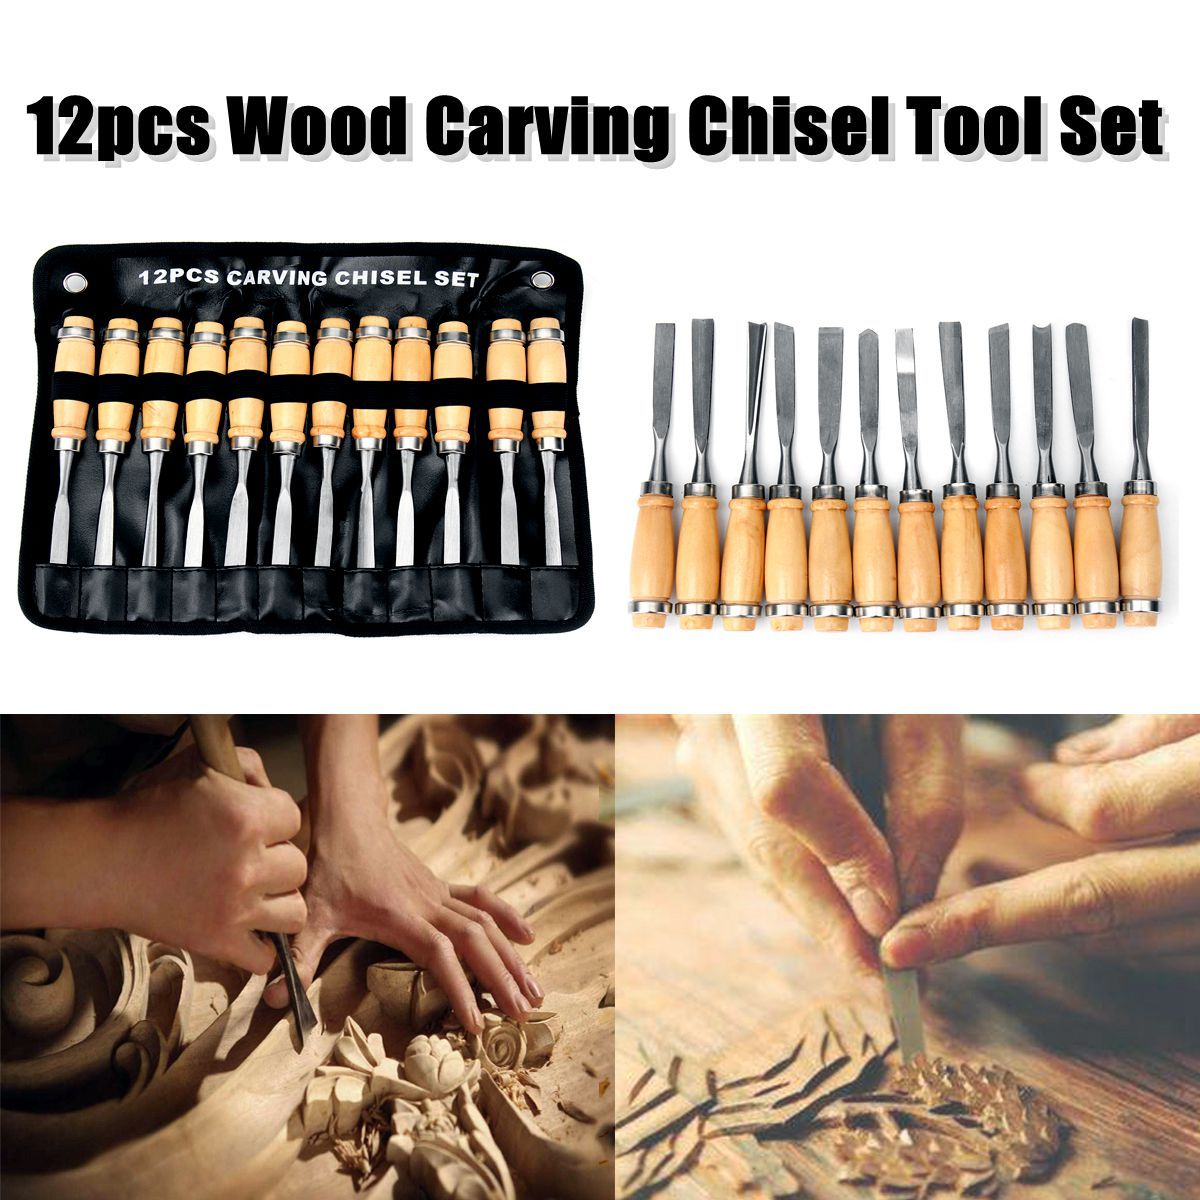 12pcs-Wood-Carving-Hand-Chisel-Tool-Set-Professional-Wood-Working-Gouges-Steel-1188800